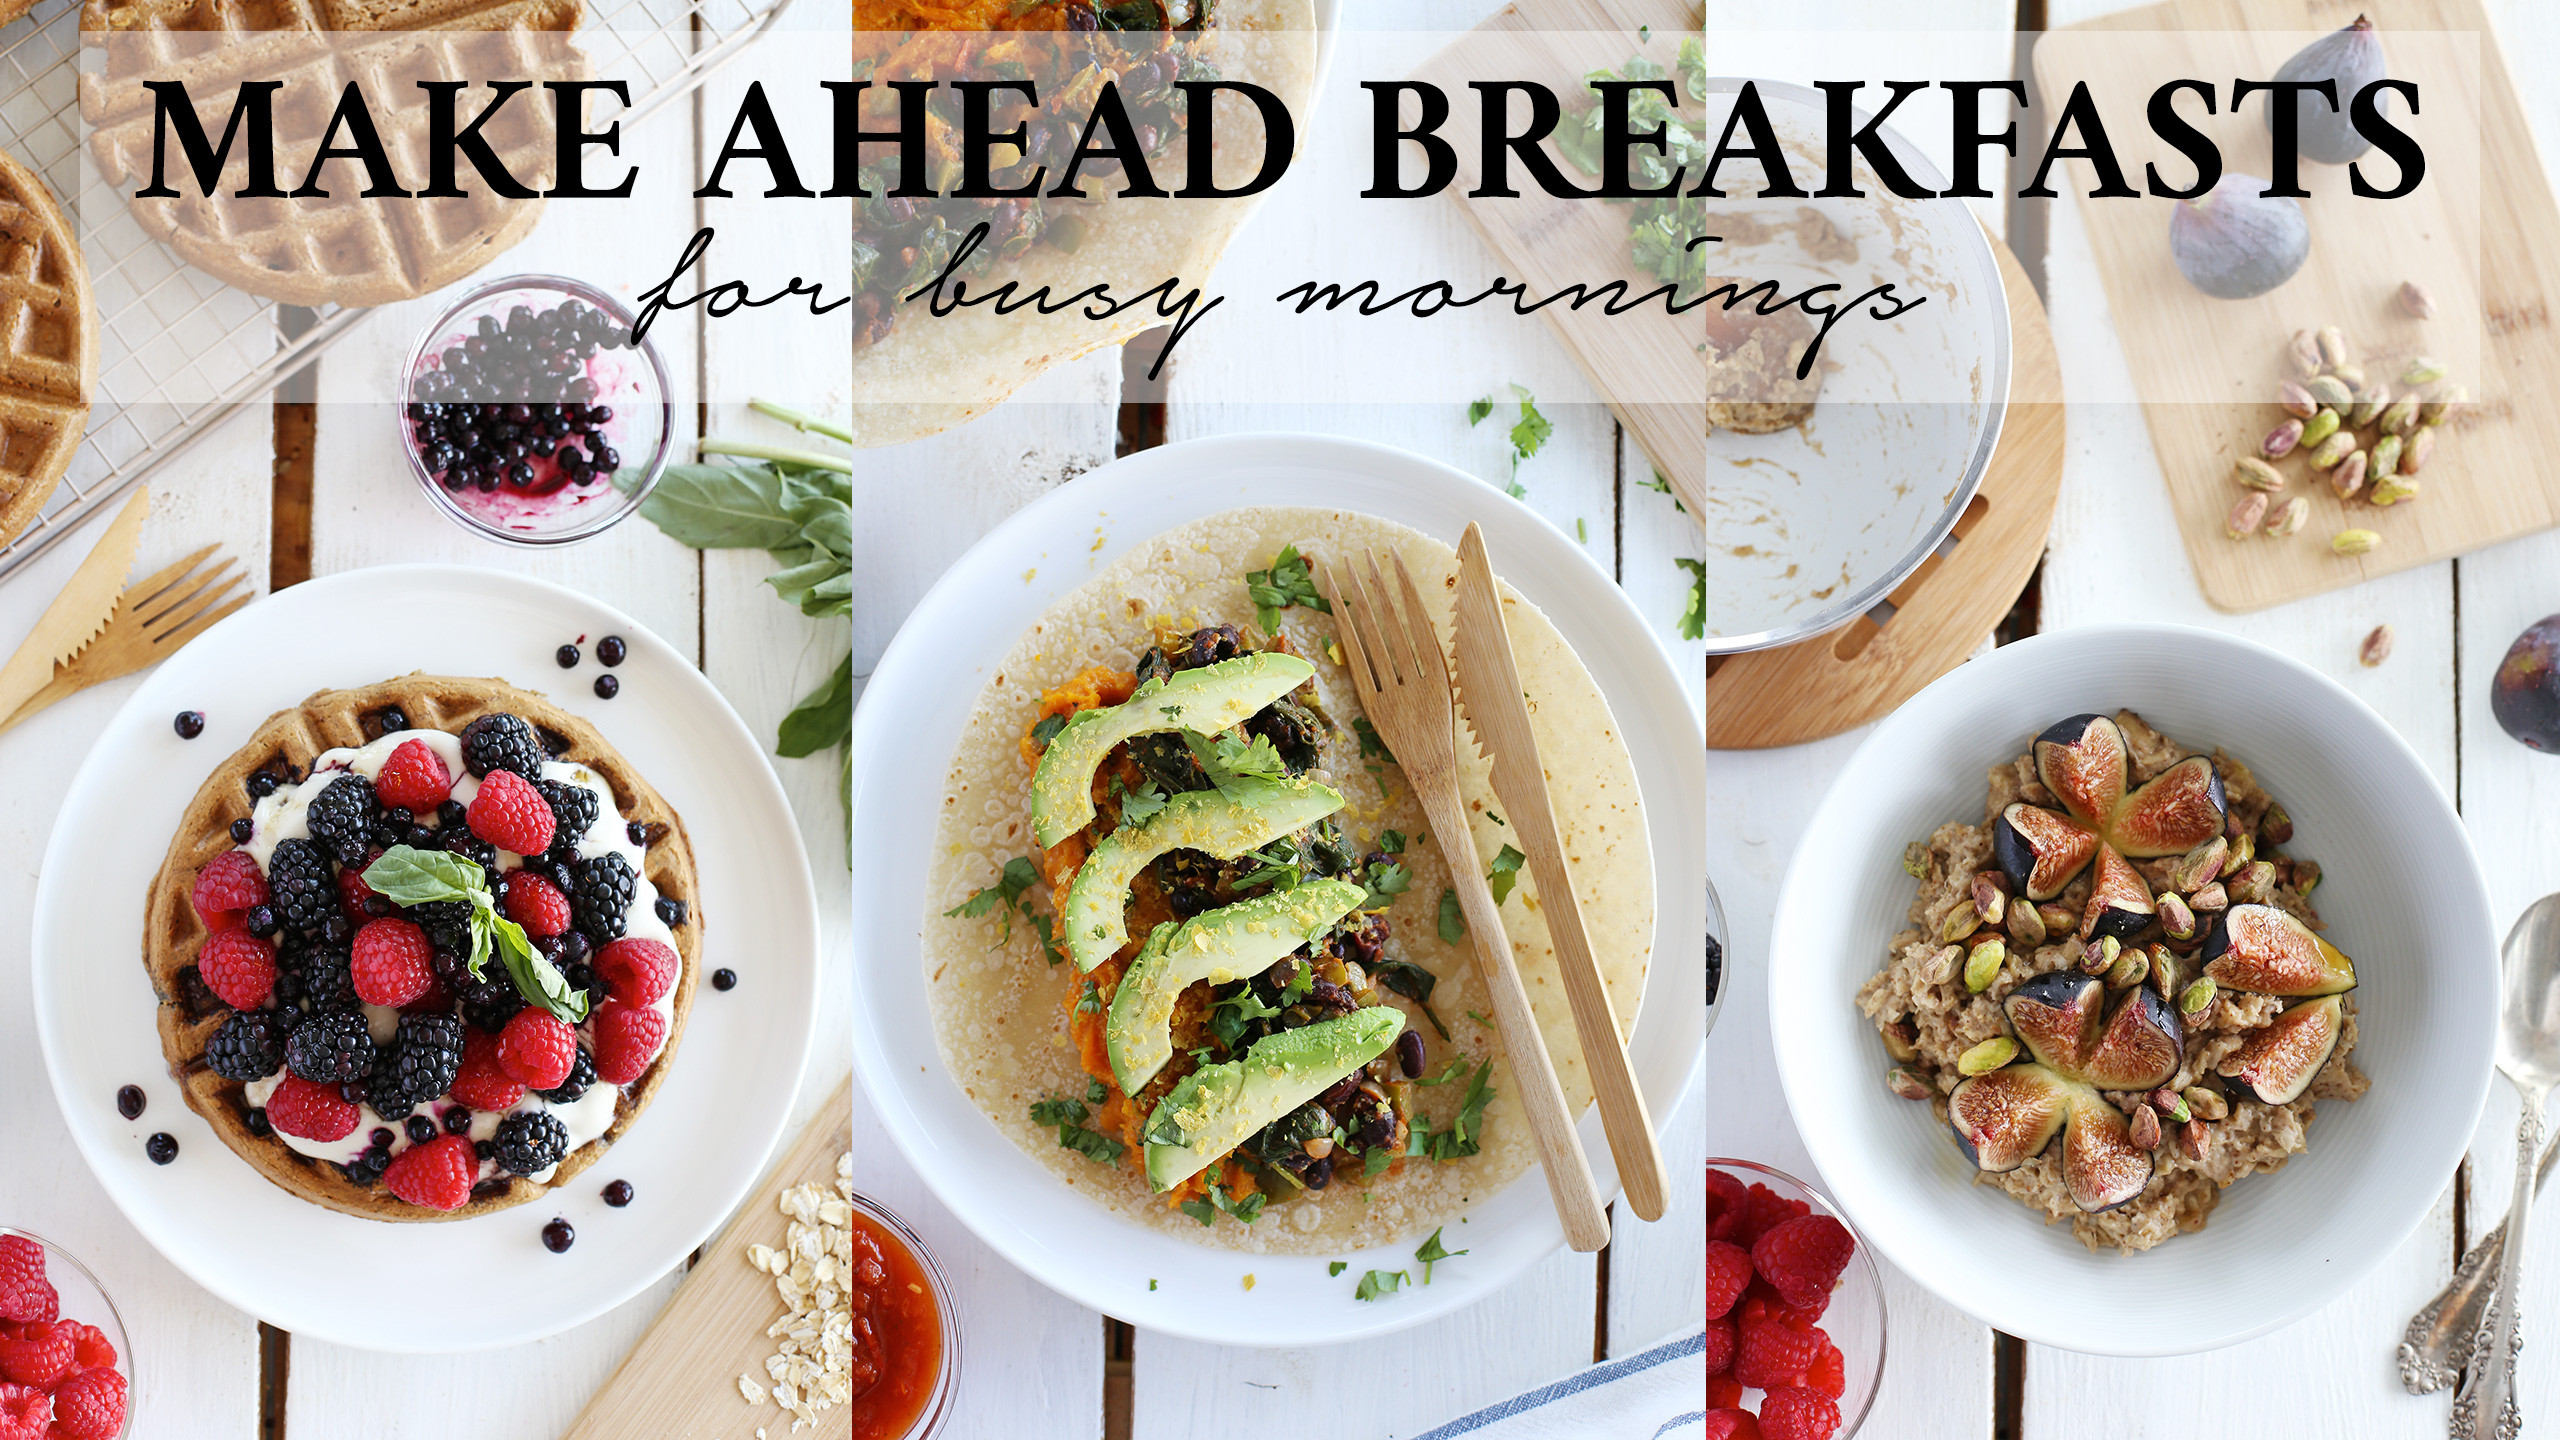 Vegan Brunch Recipes Make Ahead
 Make Ahead Breakfast Ideas